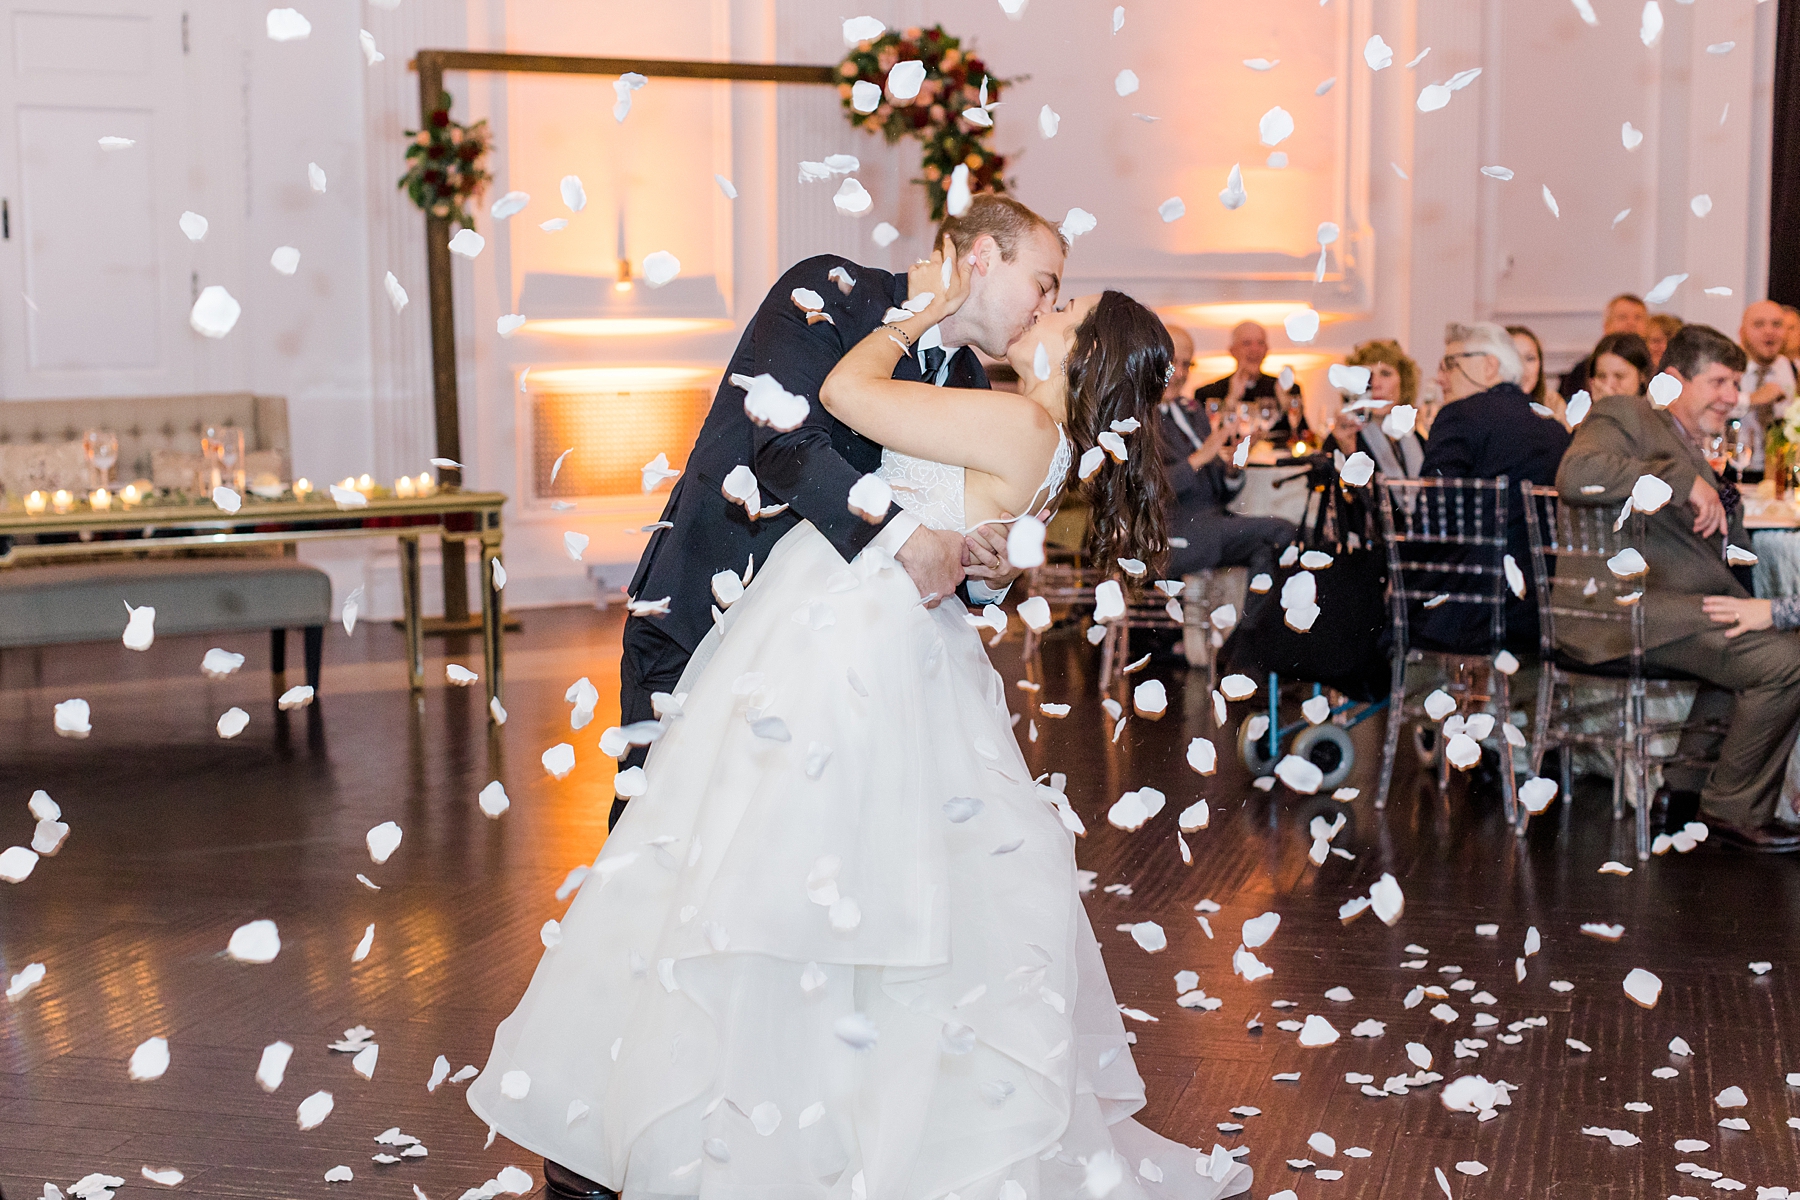 petal cannon sends rainfall of flowers around newlyweds on dance floor  